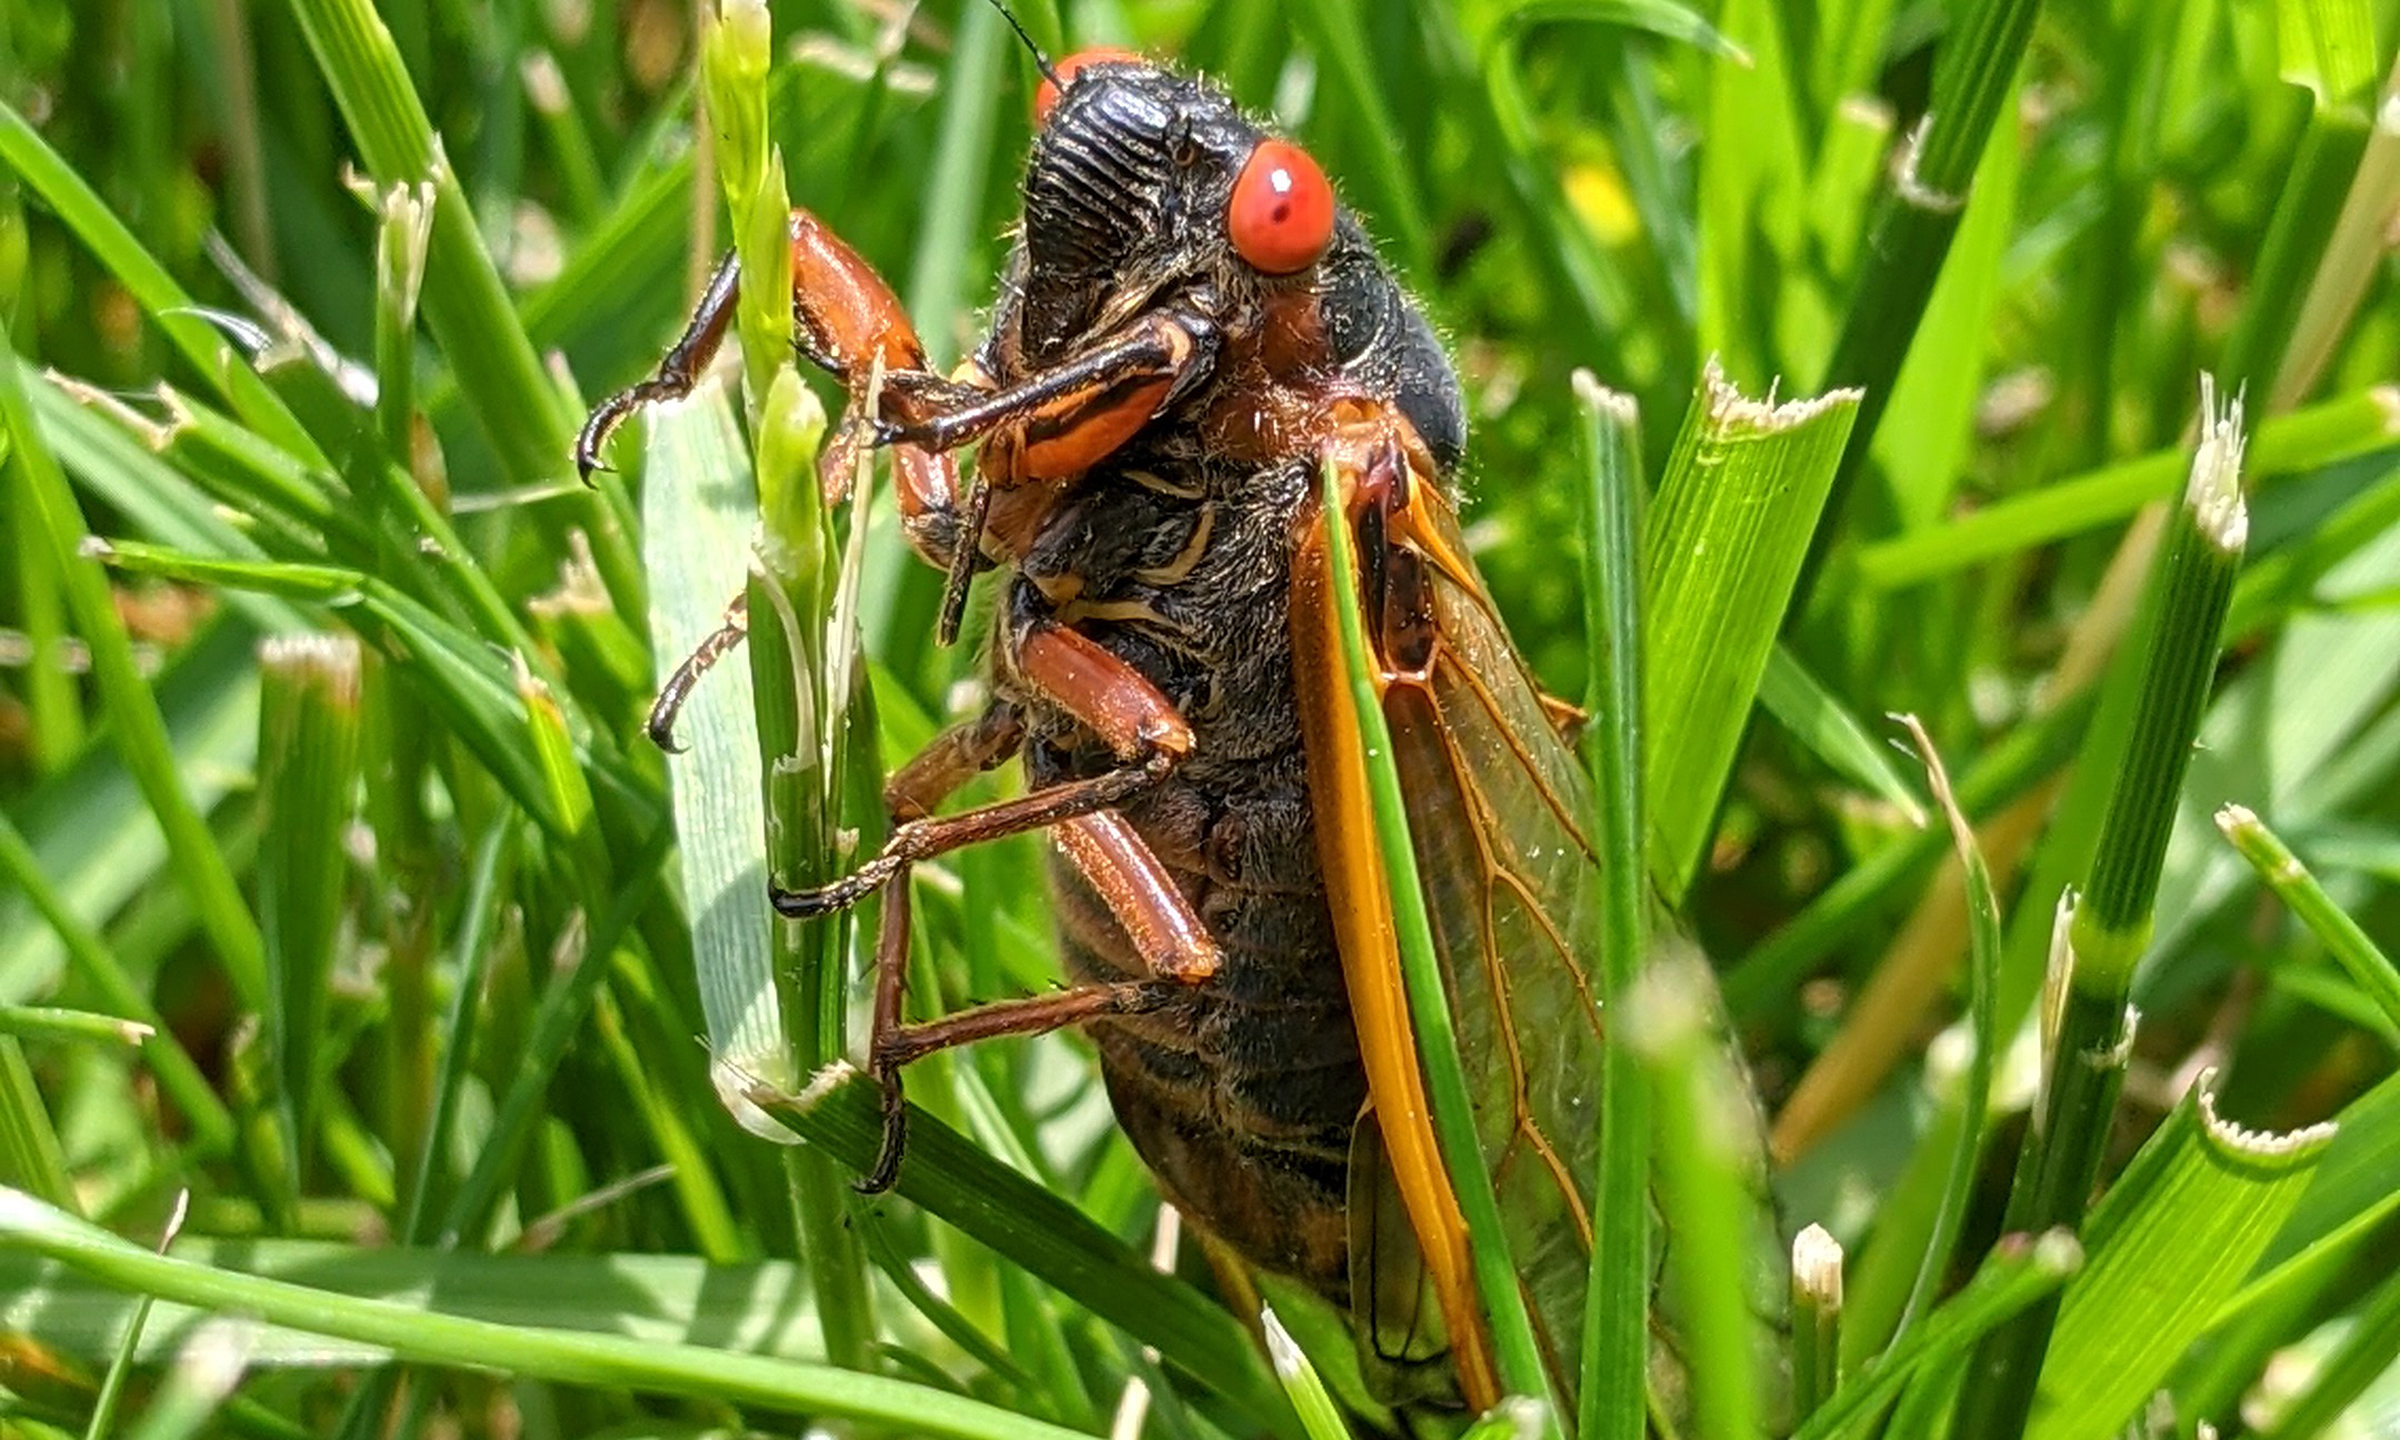 Brood X Cicada Invasion